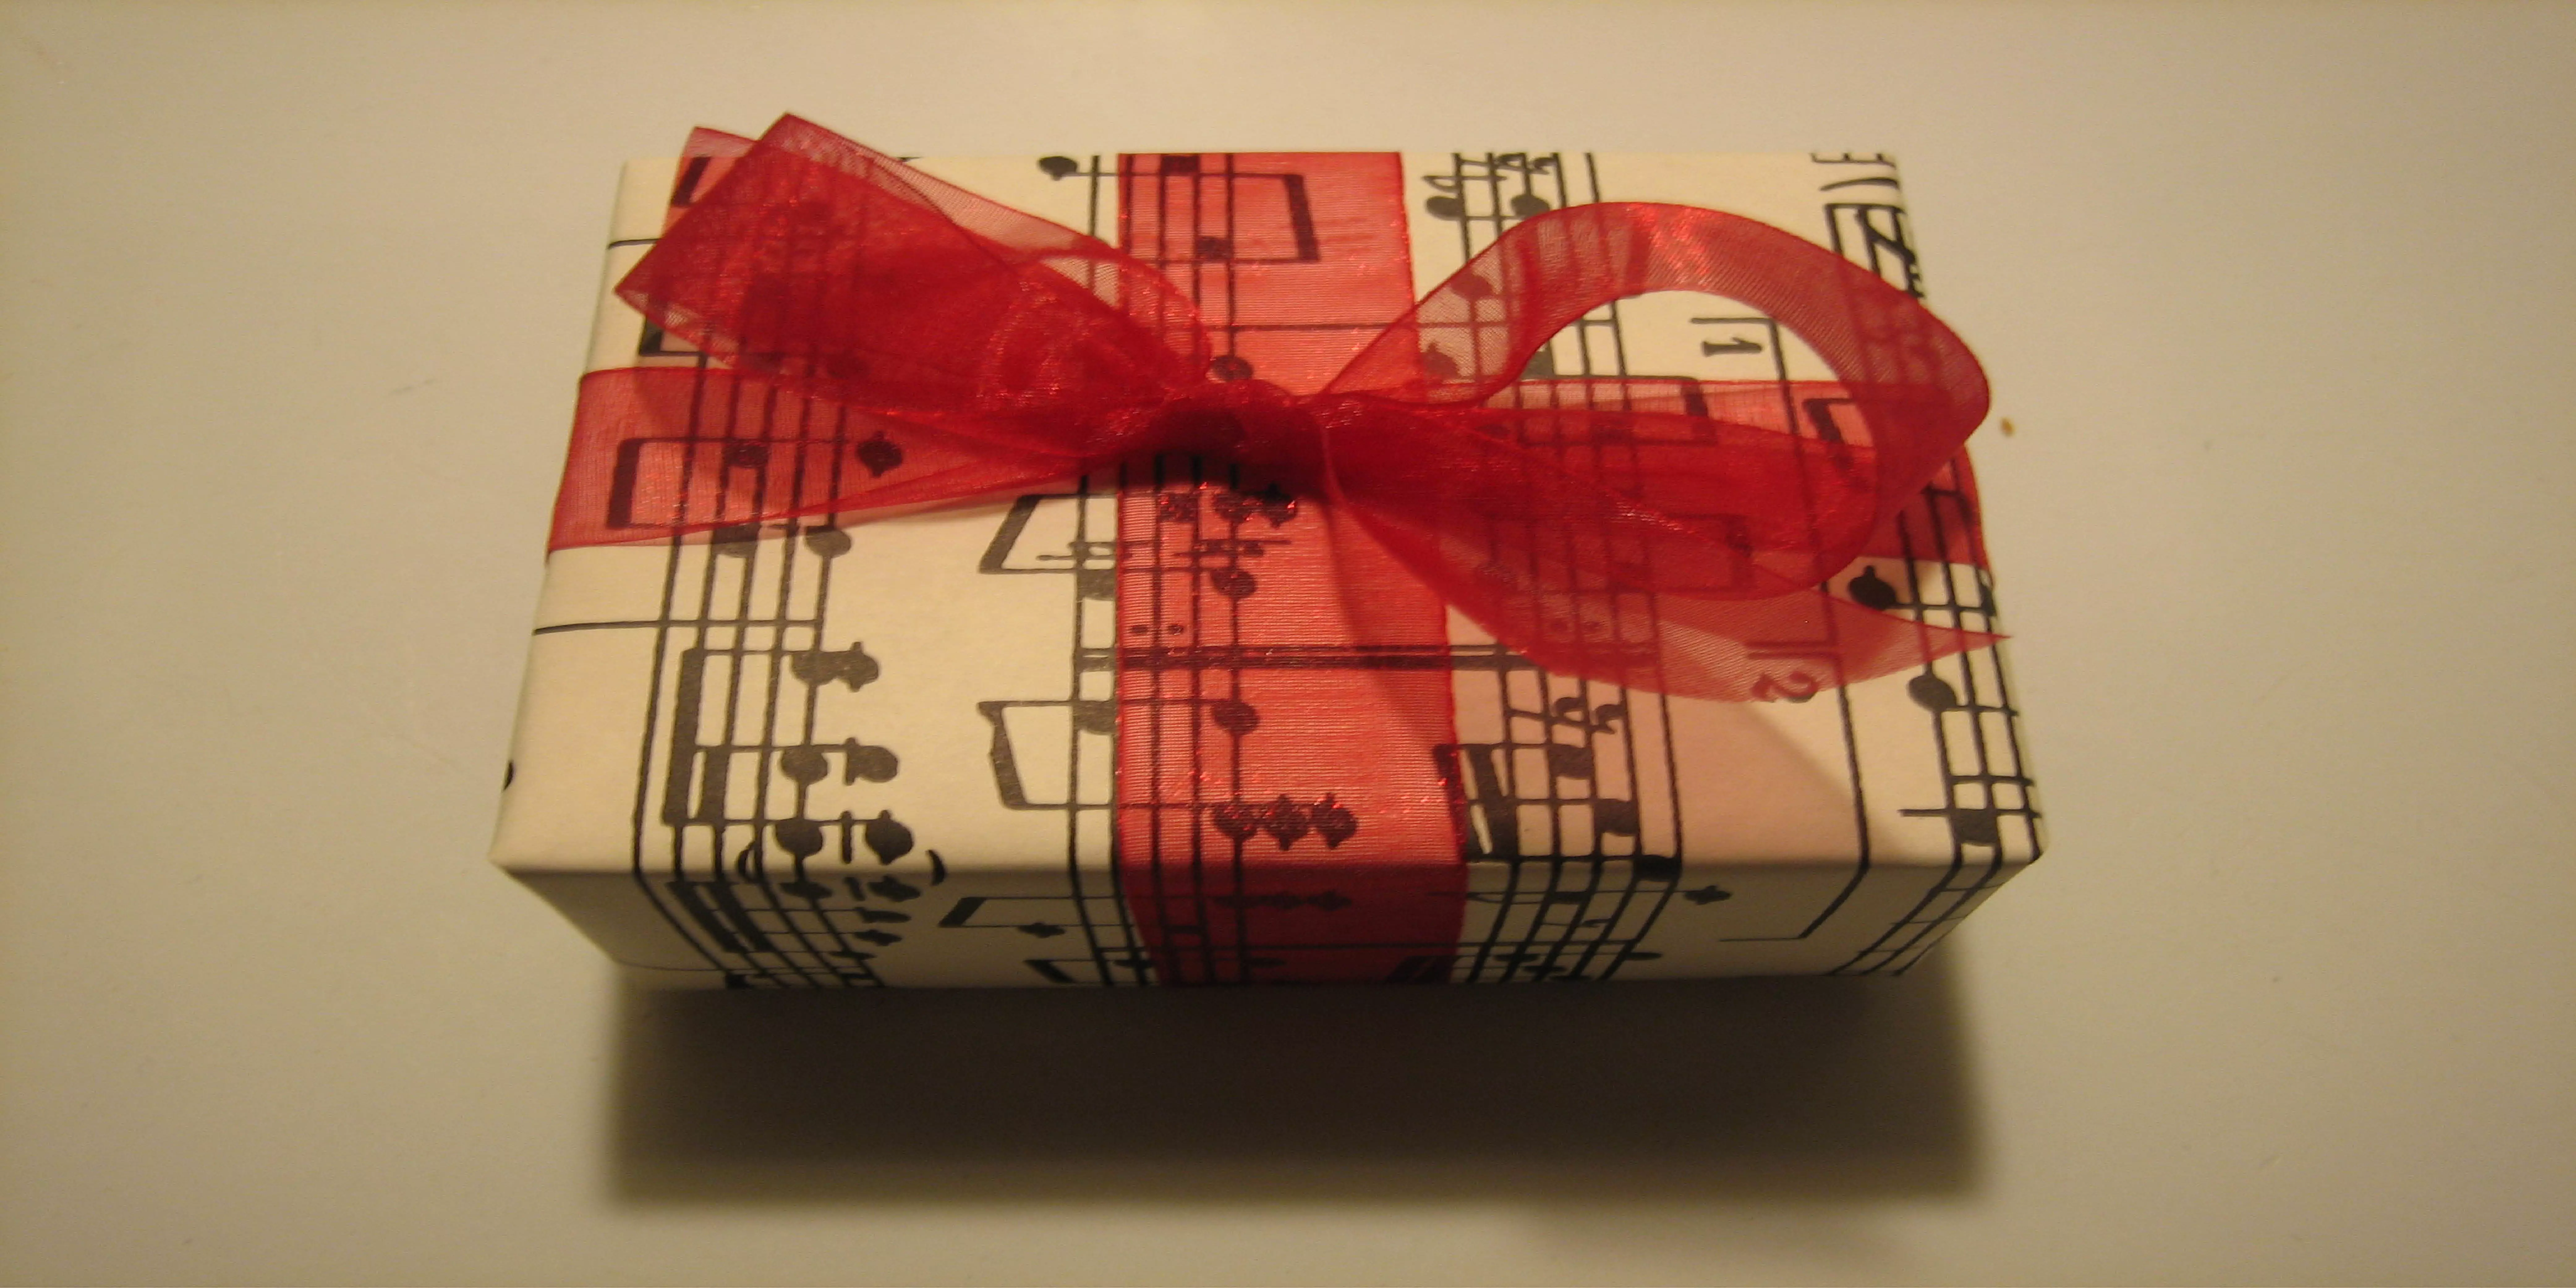 Musical Gift Giving Made Easy